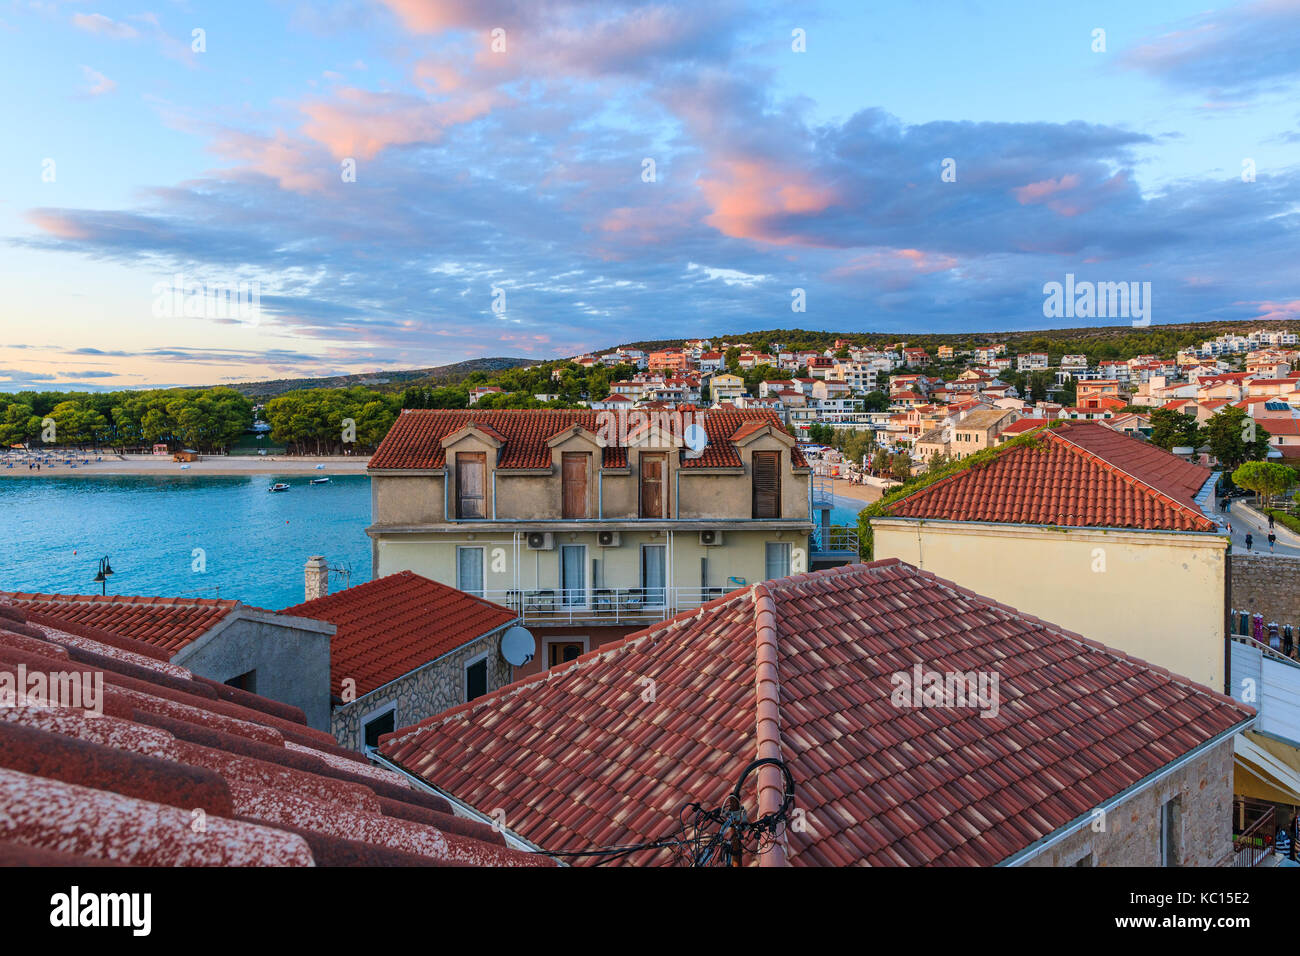 View of Primosten old town at sunset time, Dalmatia, Croatia Stock Photo